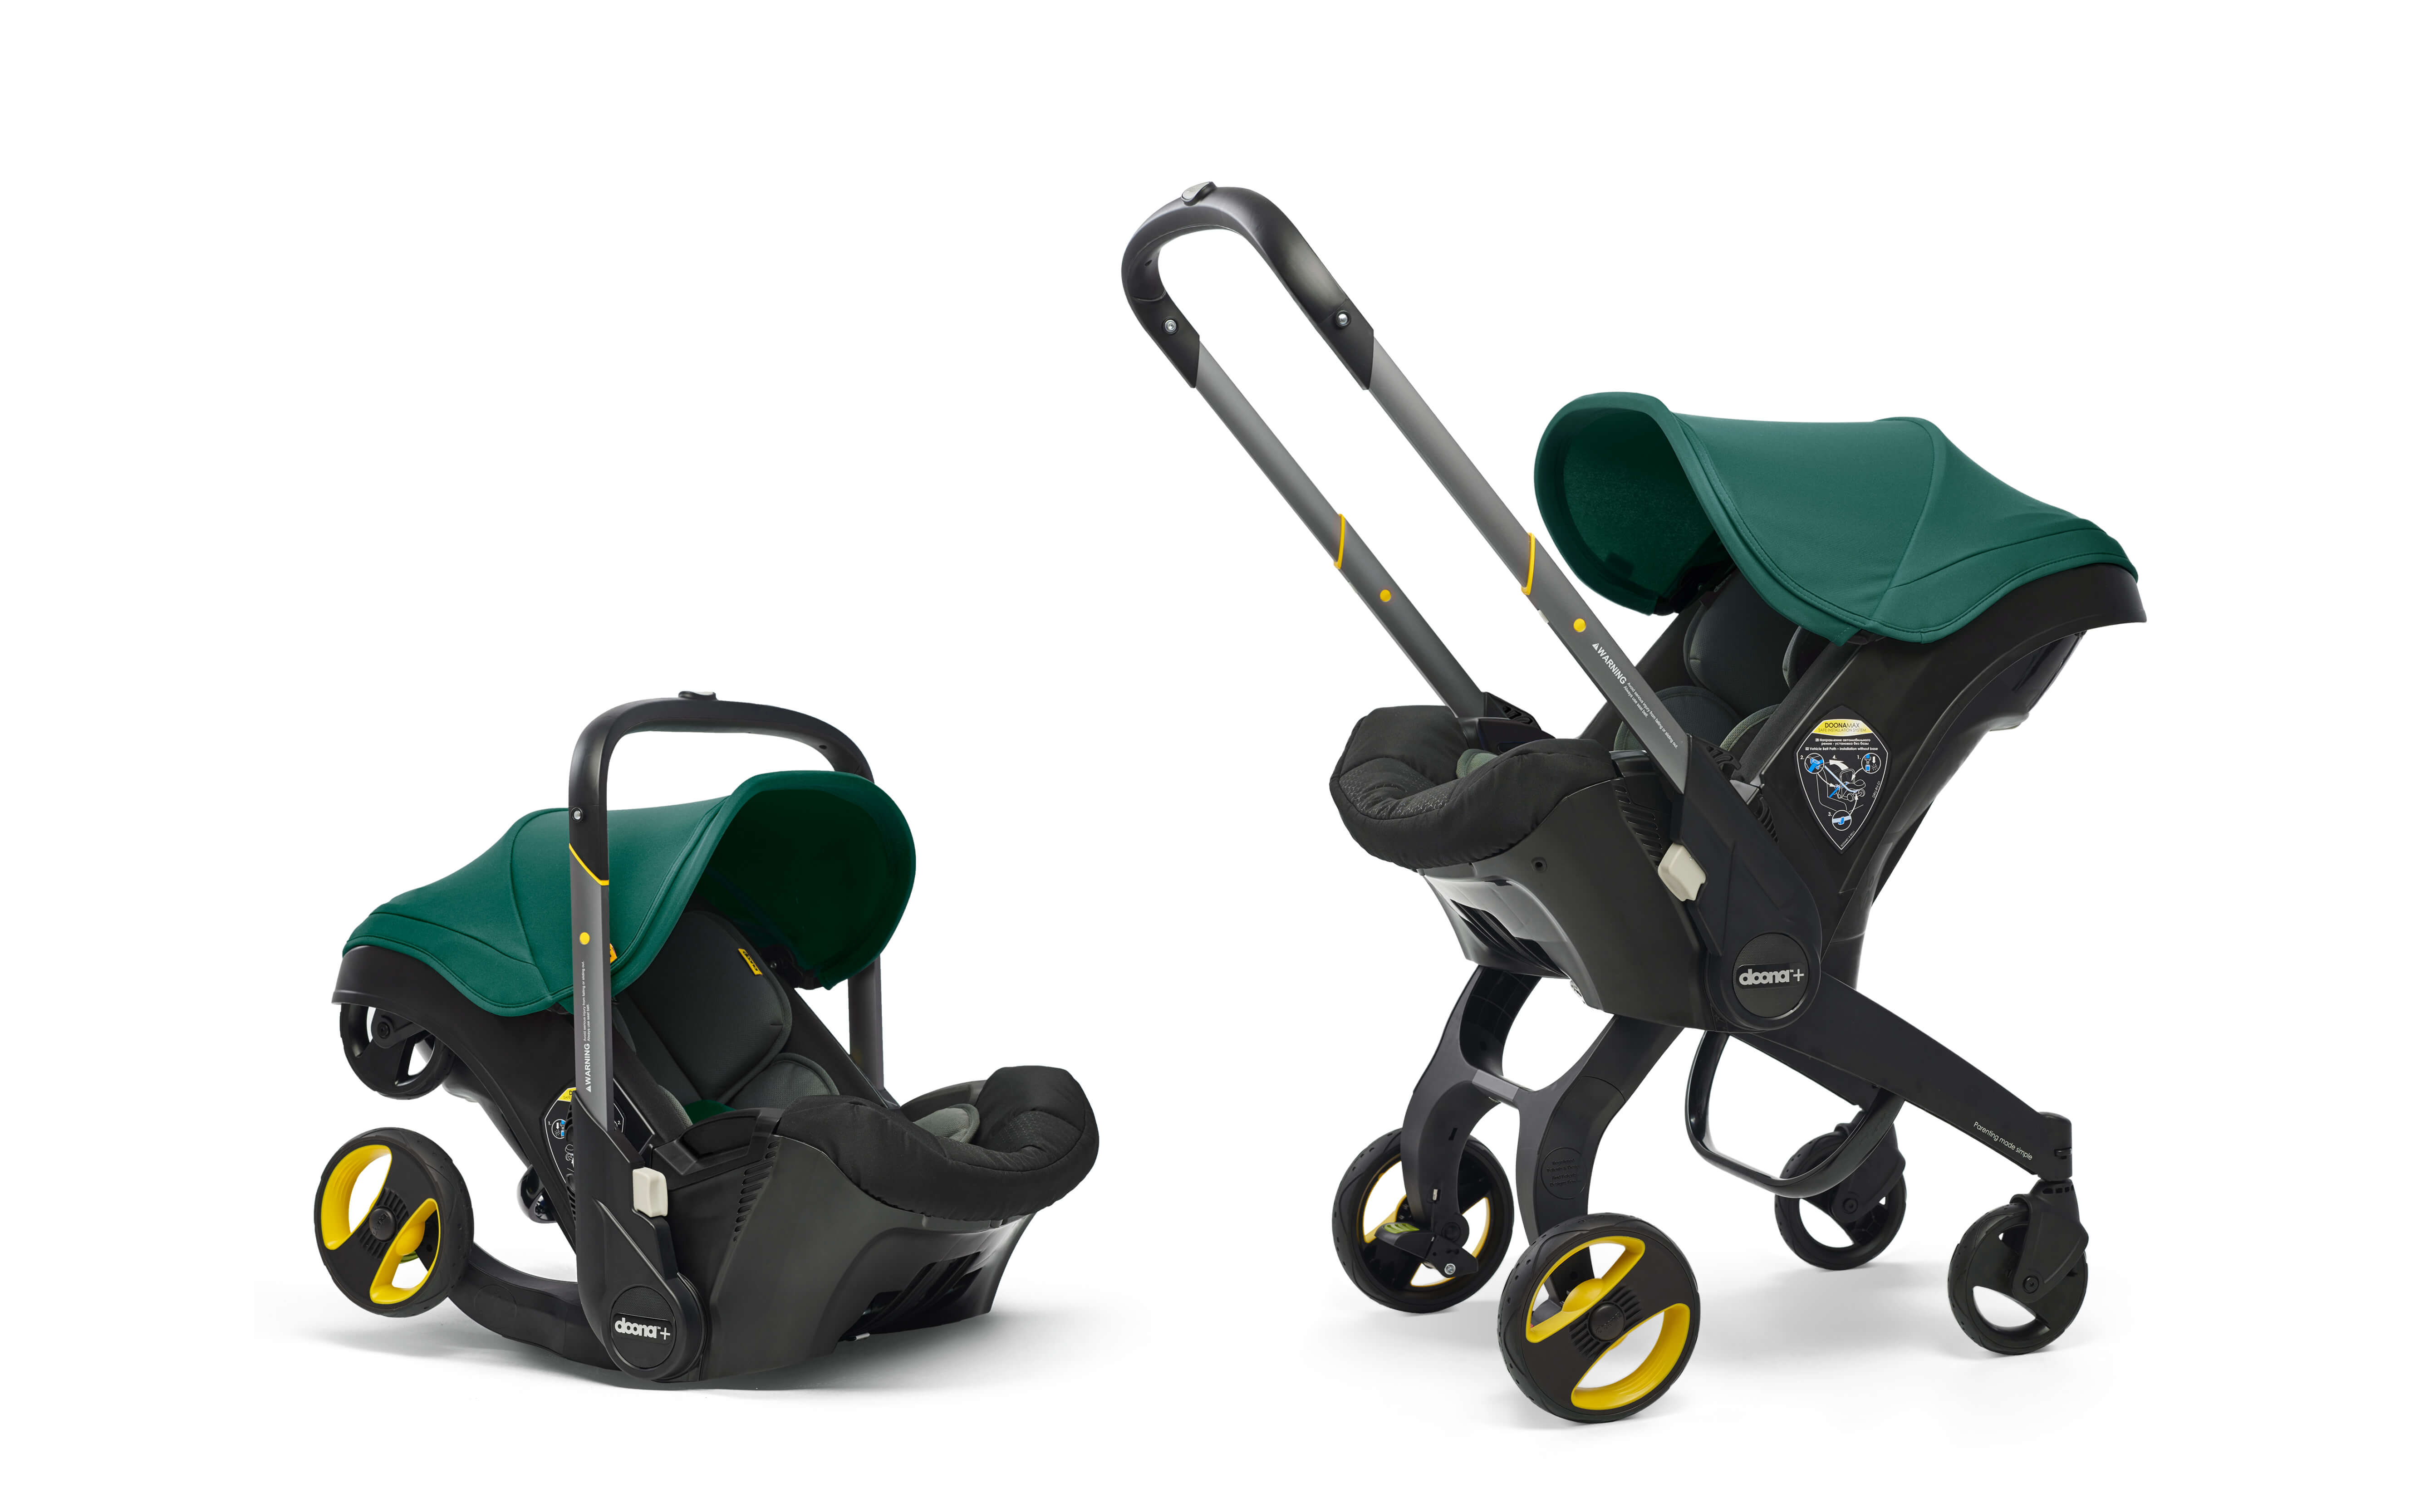  Best 2 in 1 Infant Car Seat - The Doona-Expert Pick 